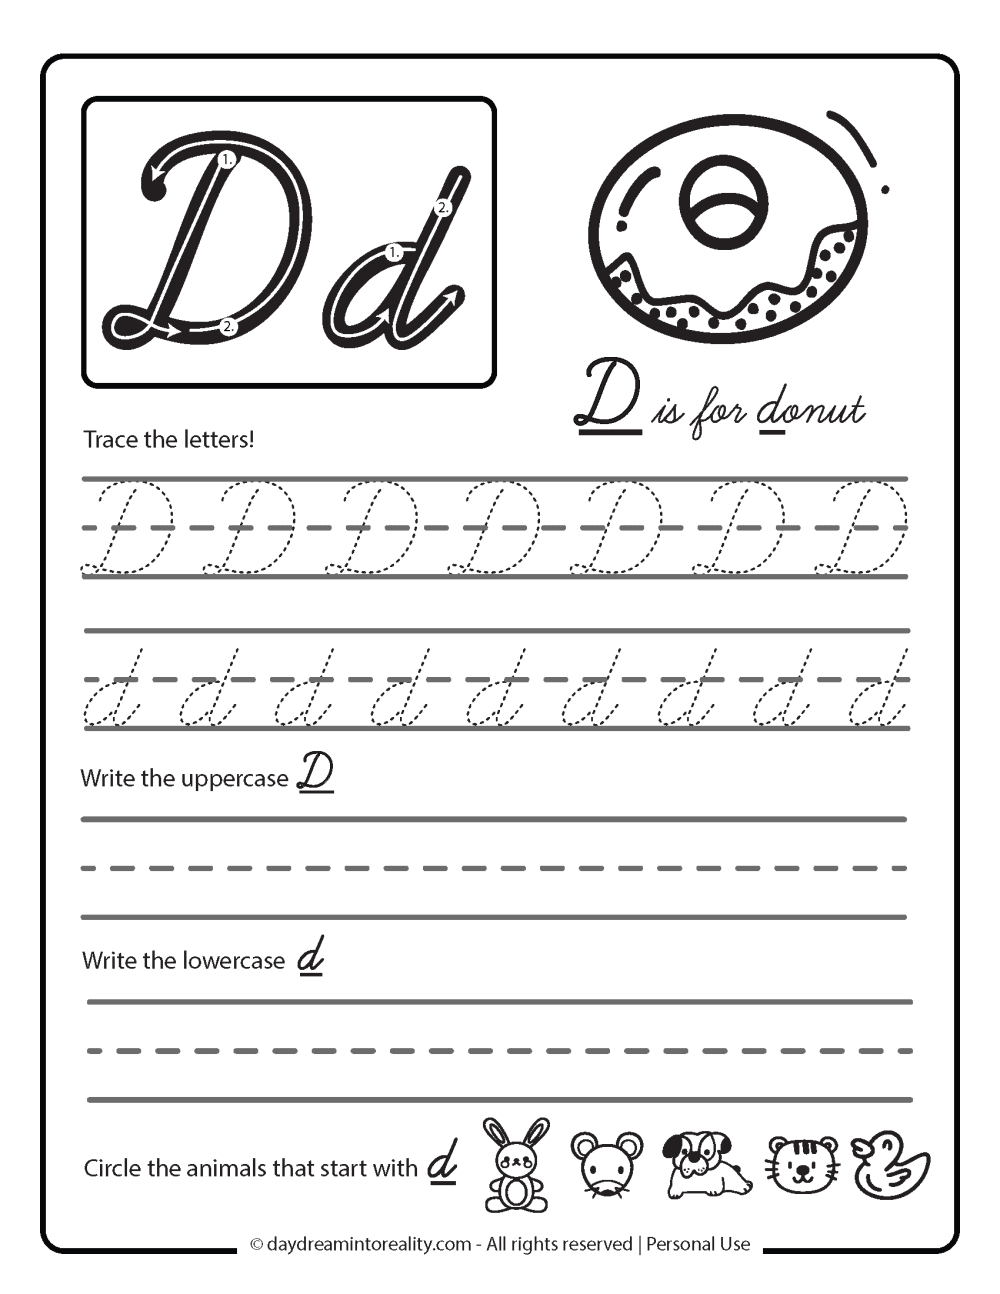 Letter D worksheet free printables - cursive writing practice - d is for donut